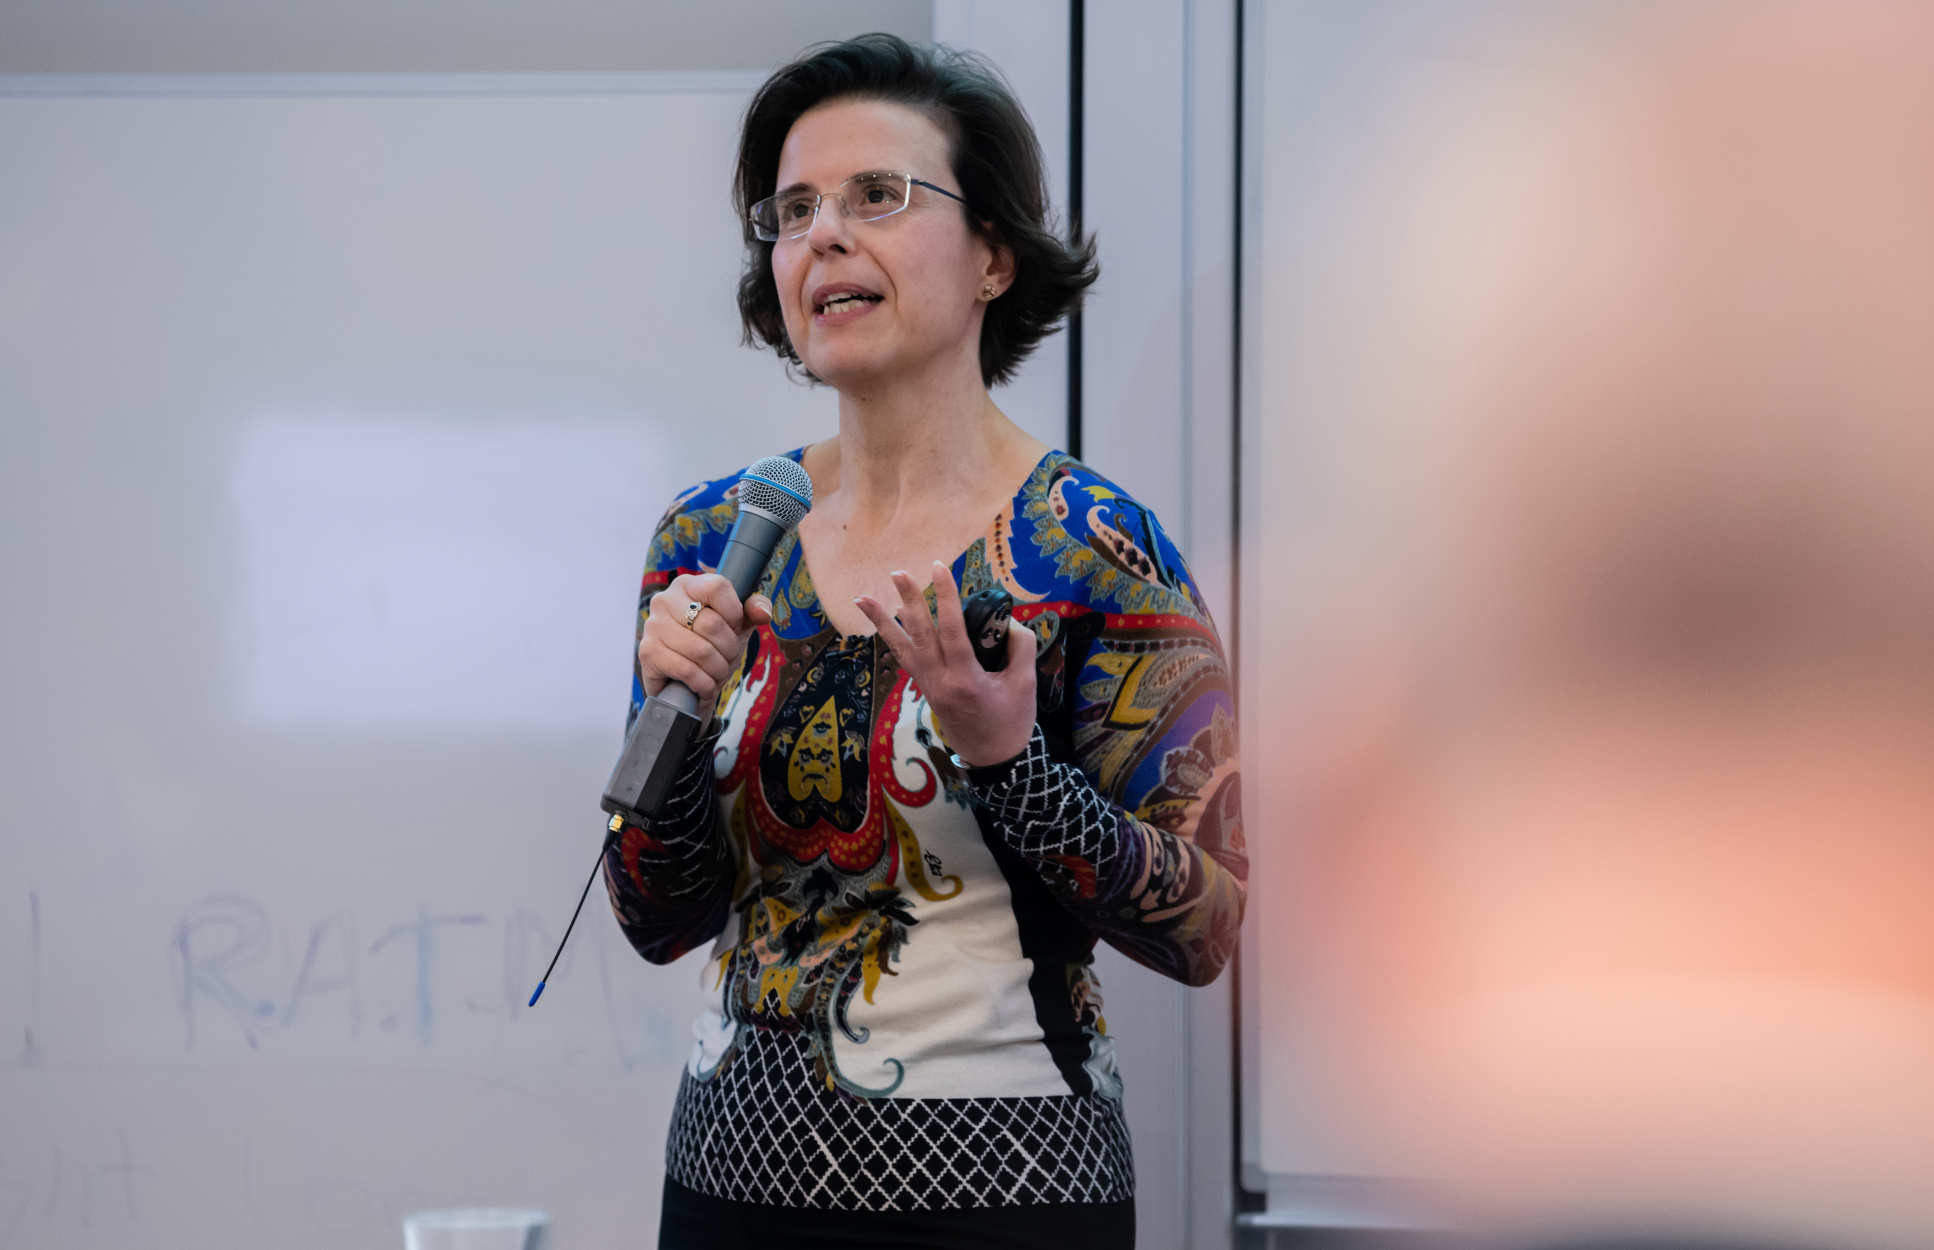 Professor Anna Korre